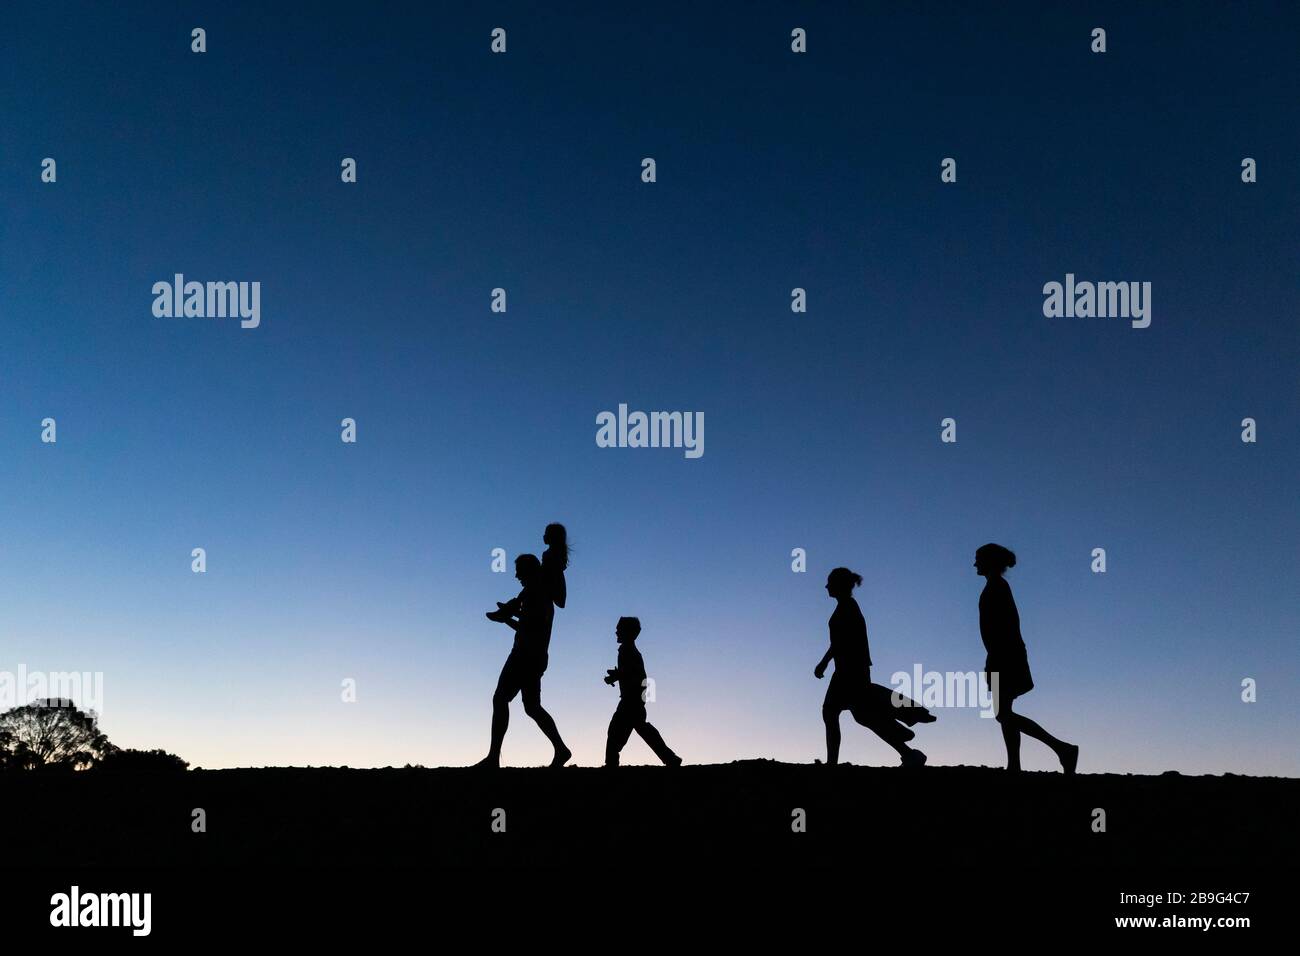 Silhouette family walking against blue sky at dusk Stock Photo